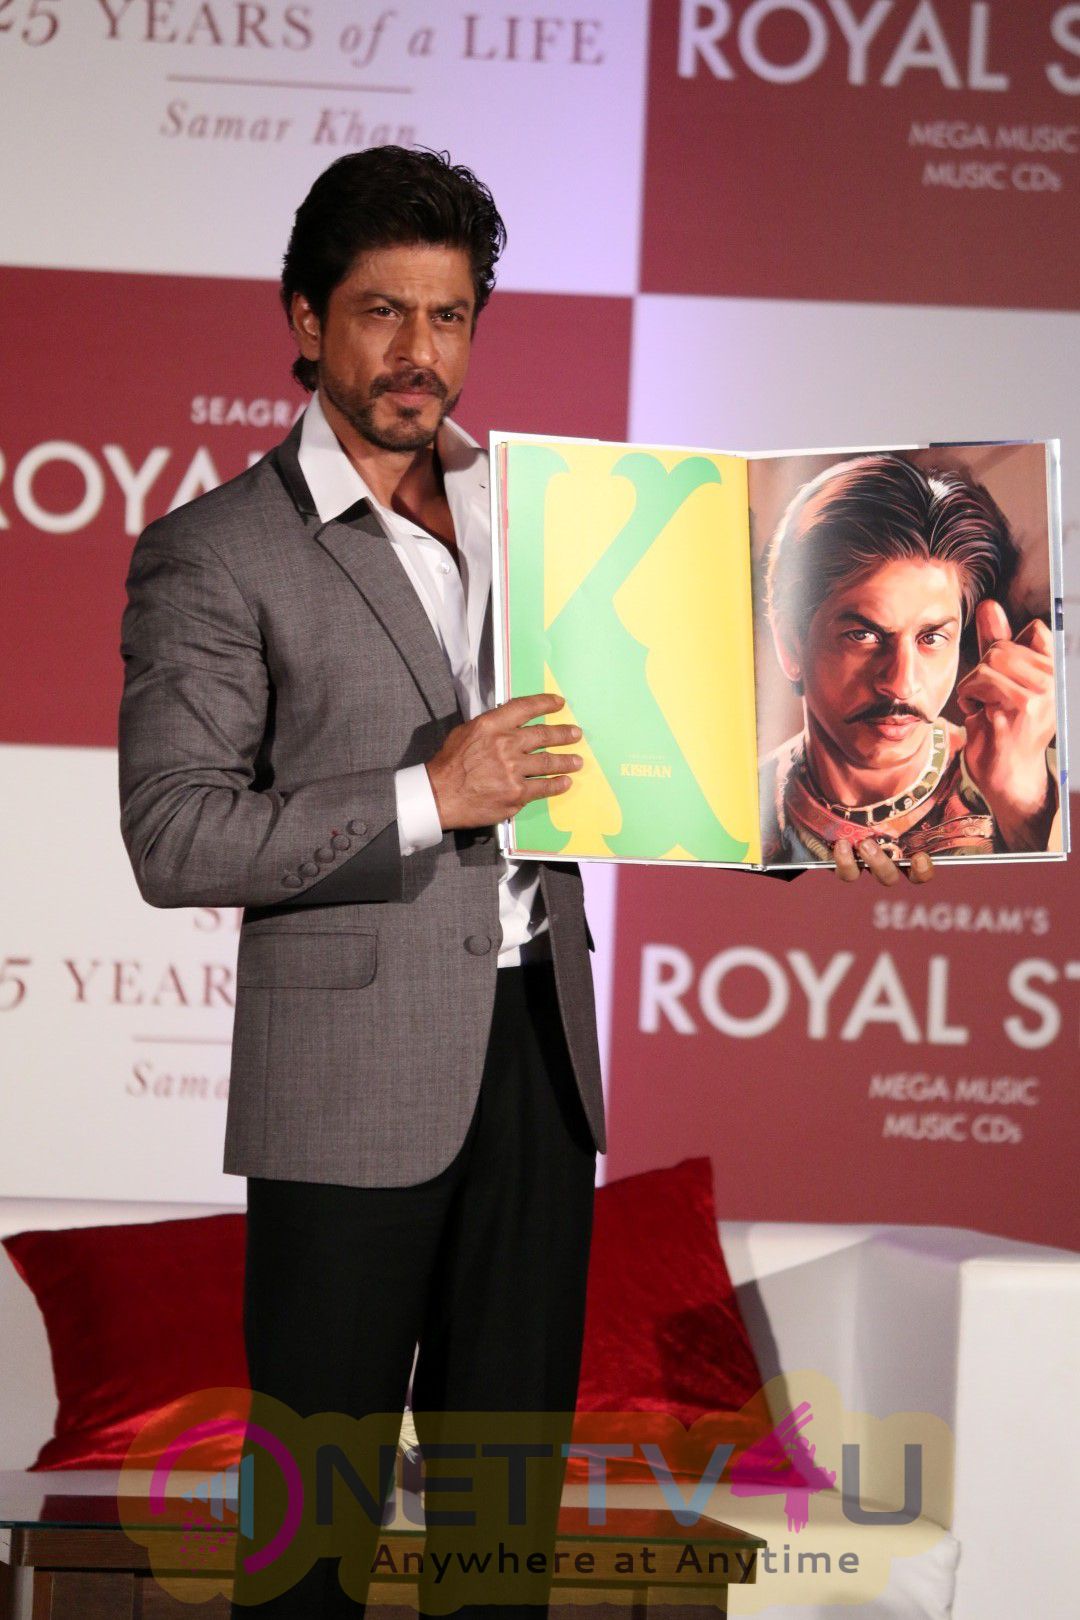 Shahrukh Khan Book Launch 25yrs Of A Life Gorgeous Photos Hindi Gallery